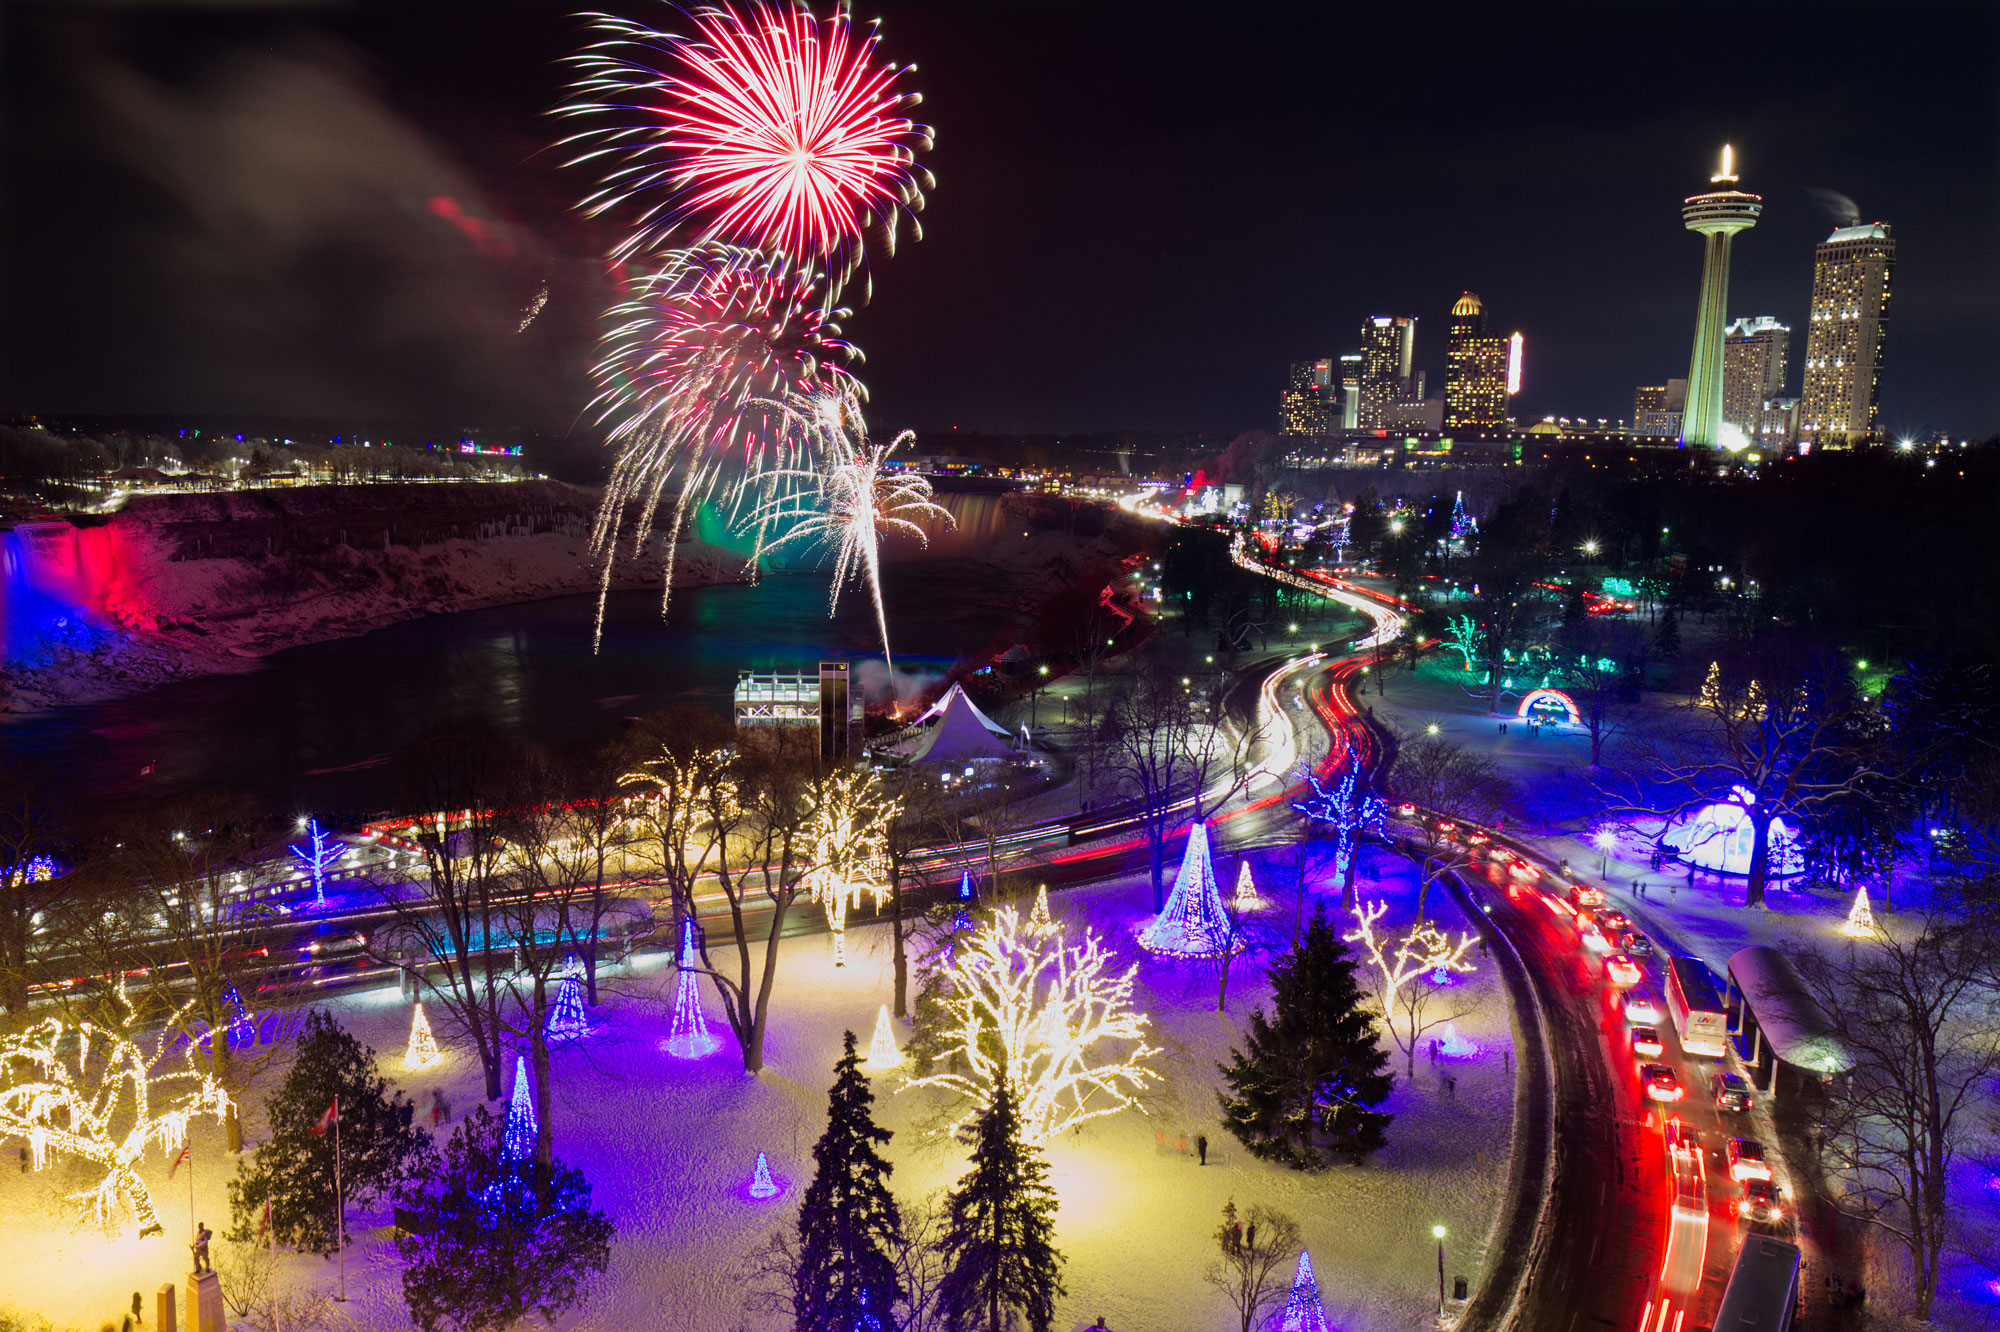 The Winter Festival of Lights in Niagara Falls Skylon Tower